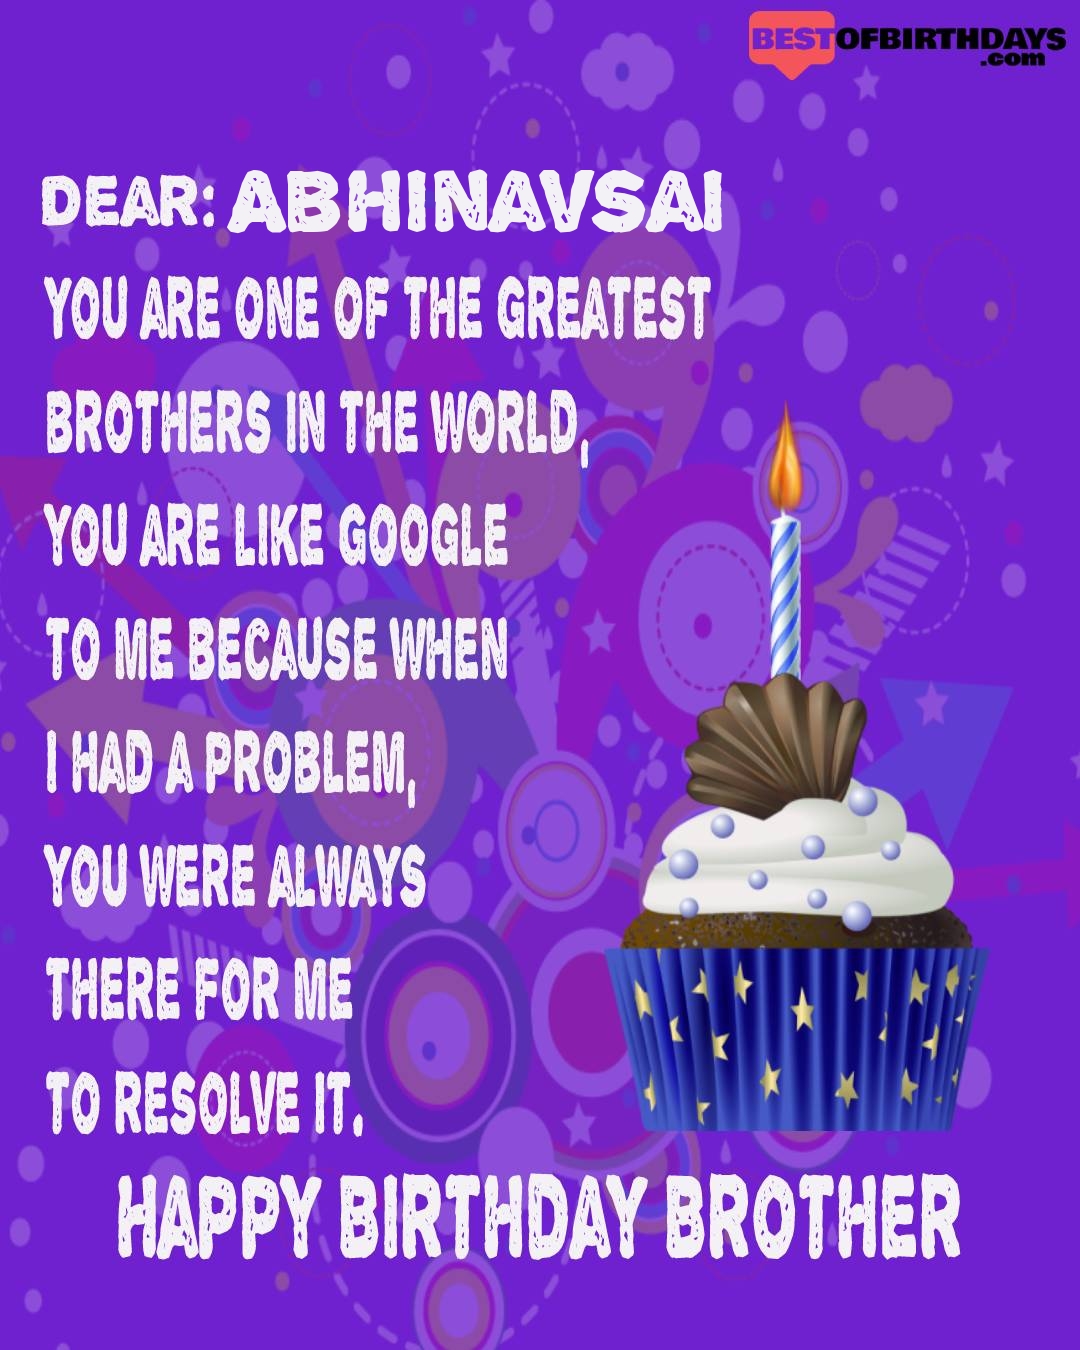 Happy birthday abhinavsai bhai brother bro